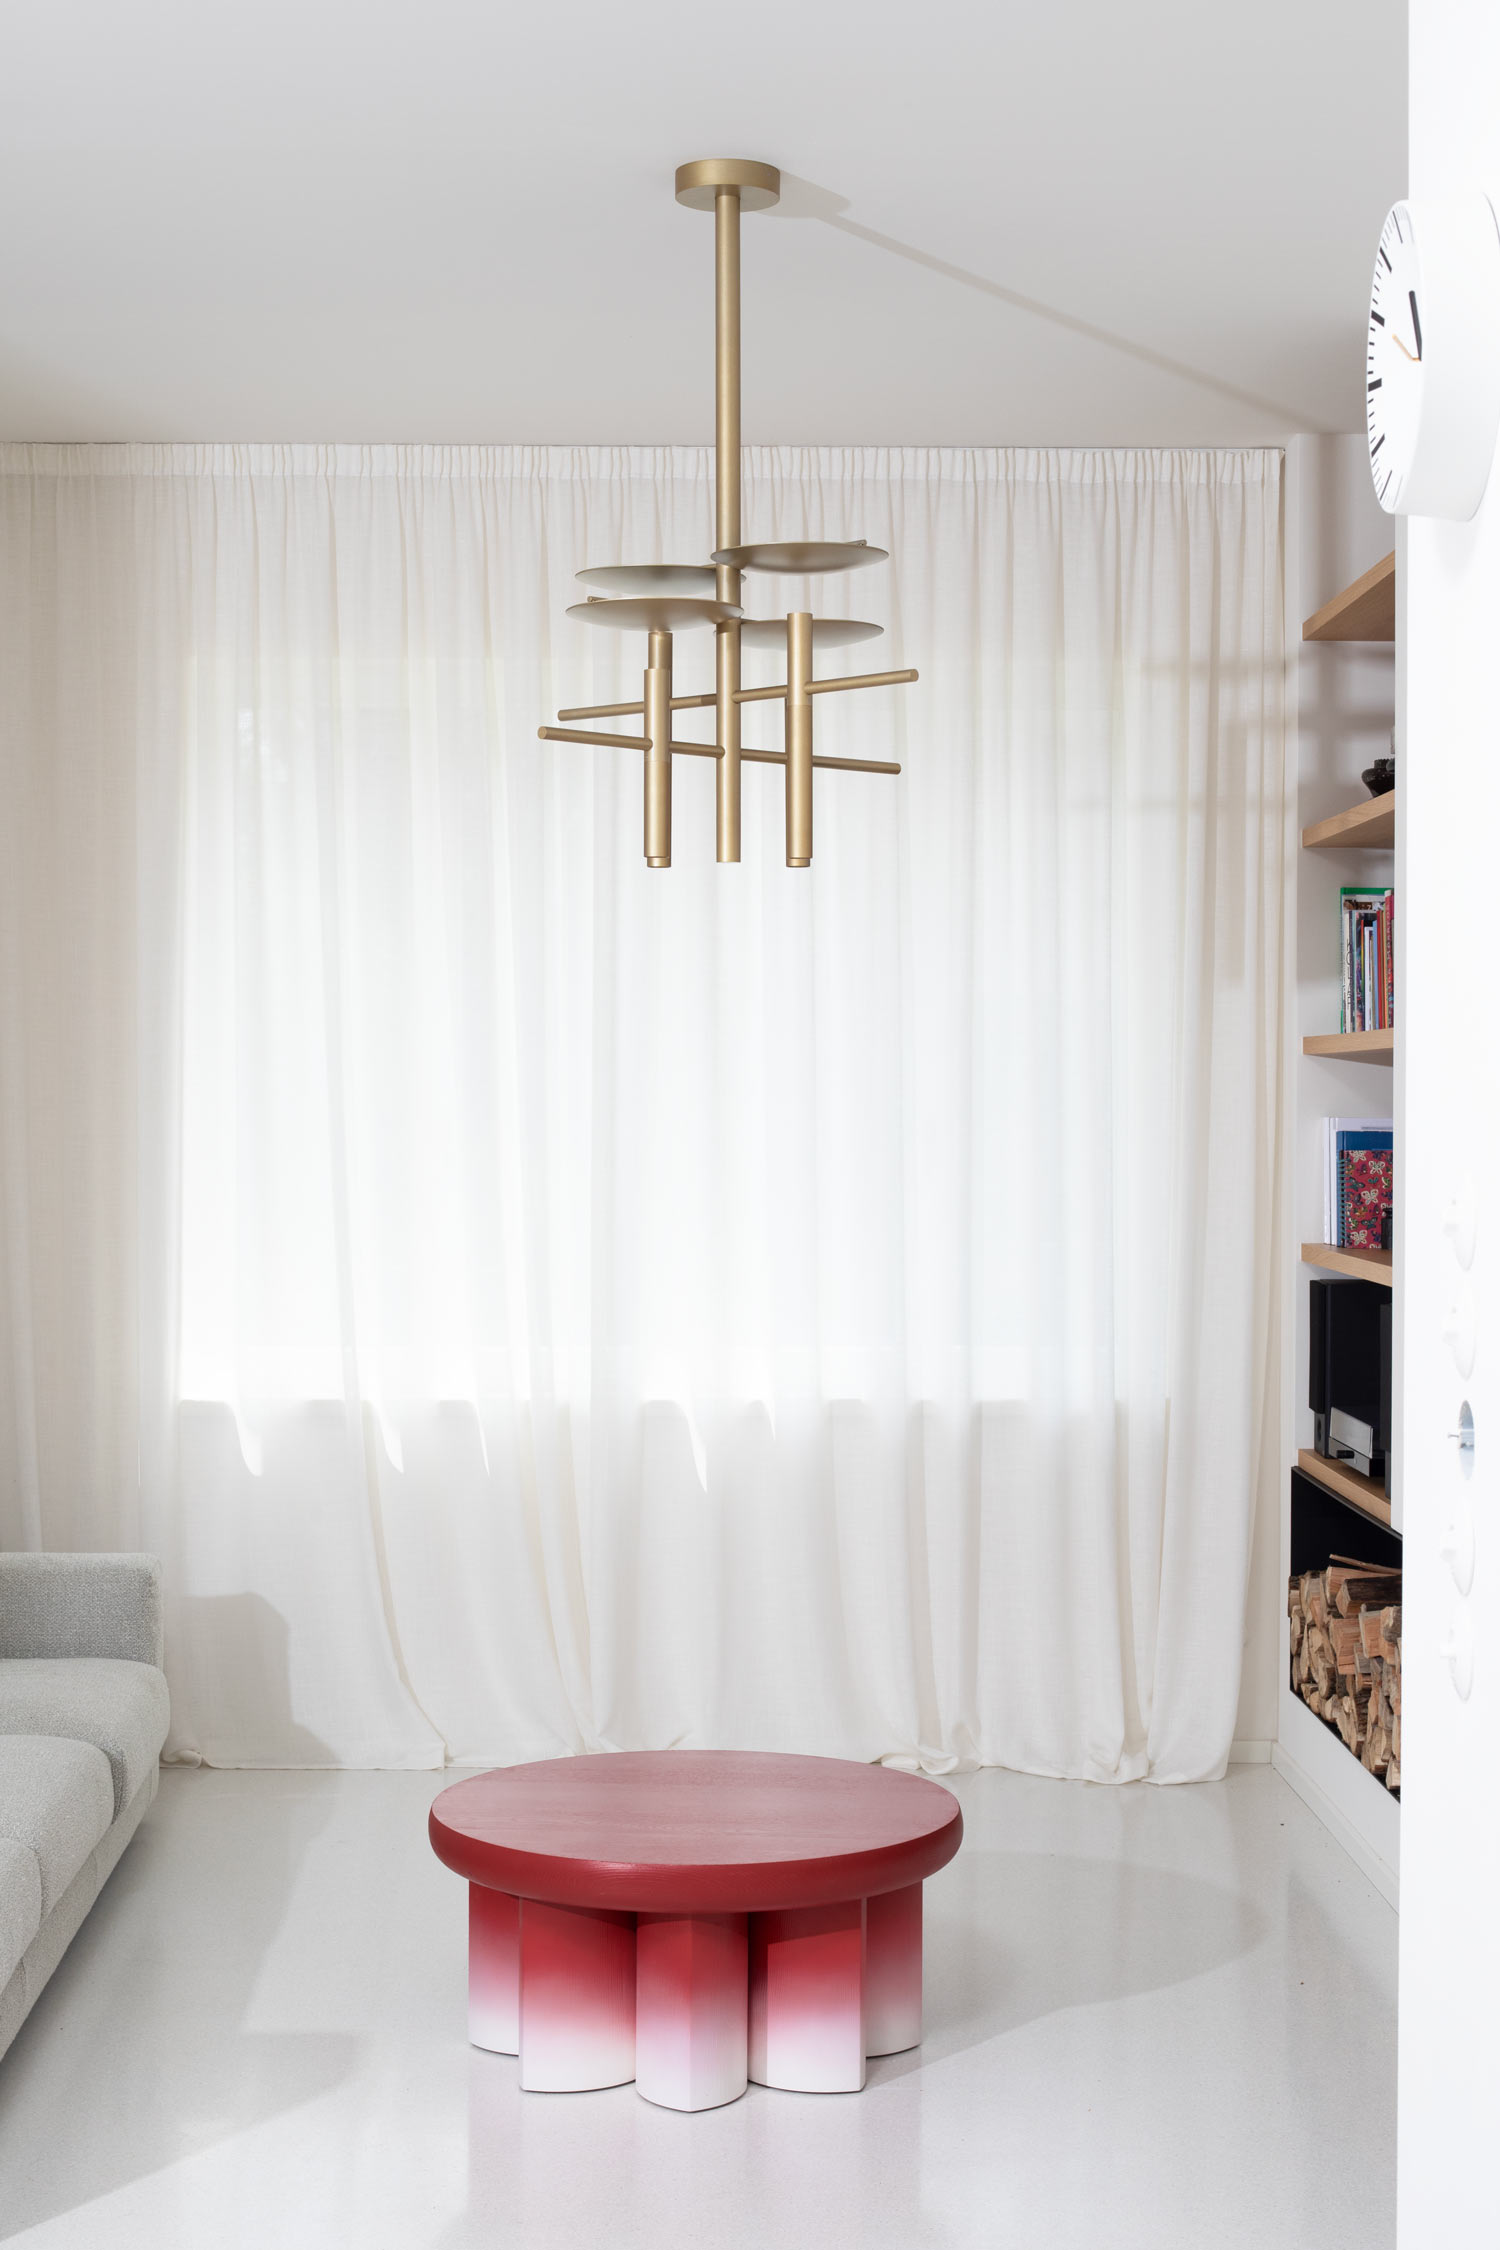 Lunae-luminaire-stainless-steel-brass-vertical-luminaire-designed-by-jiri-krejcirik-interior-context